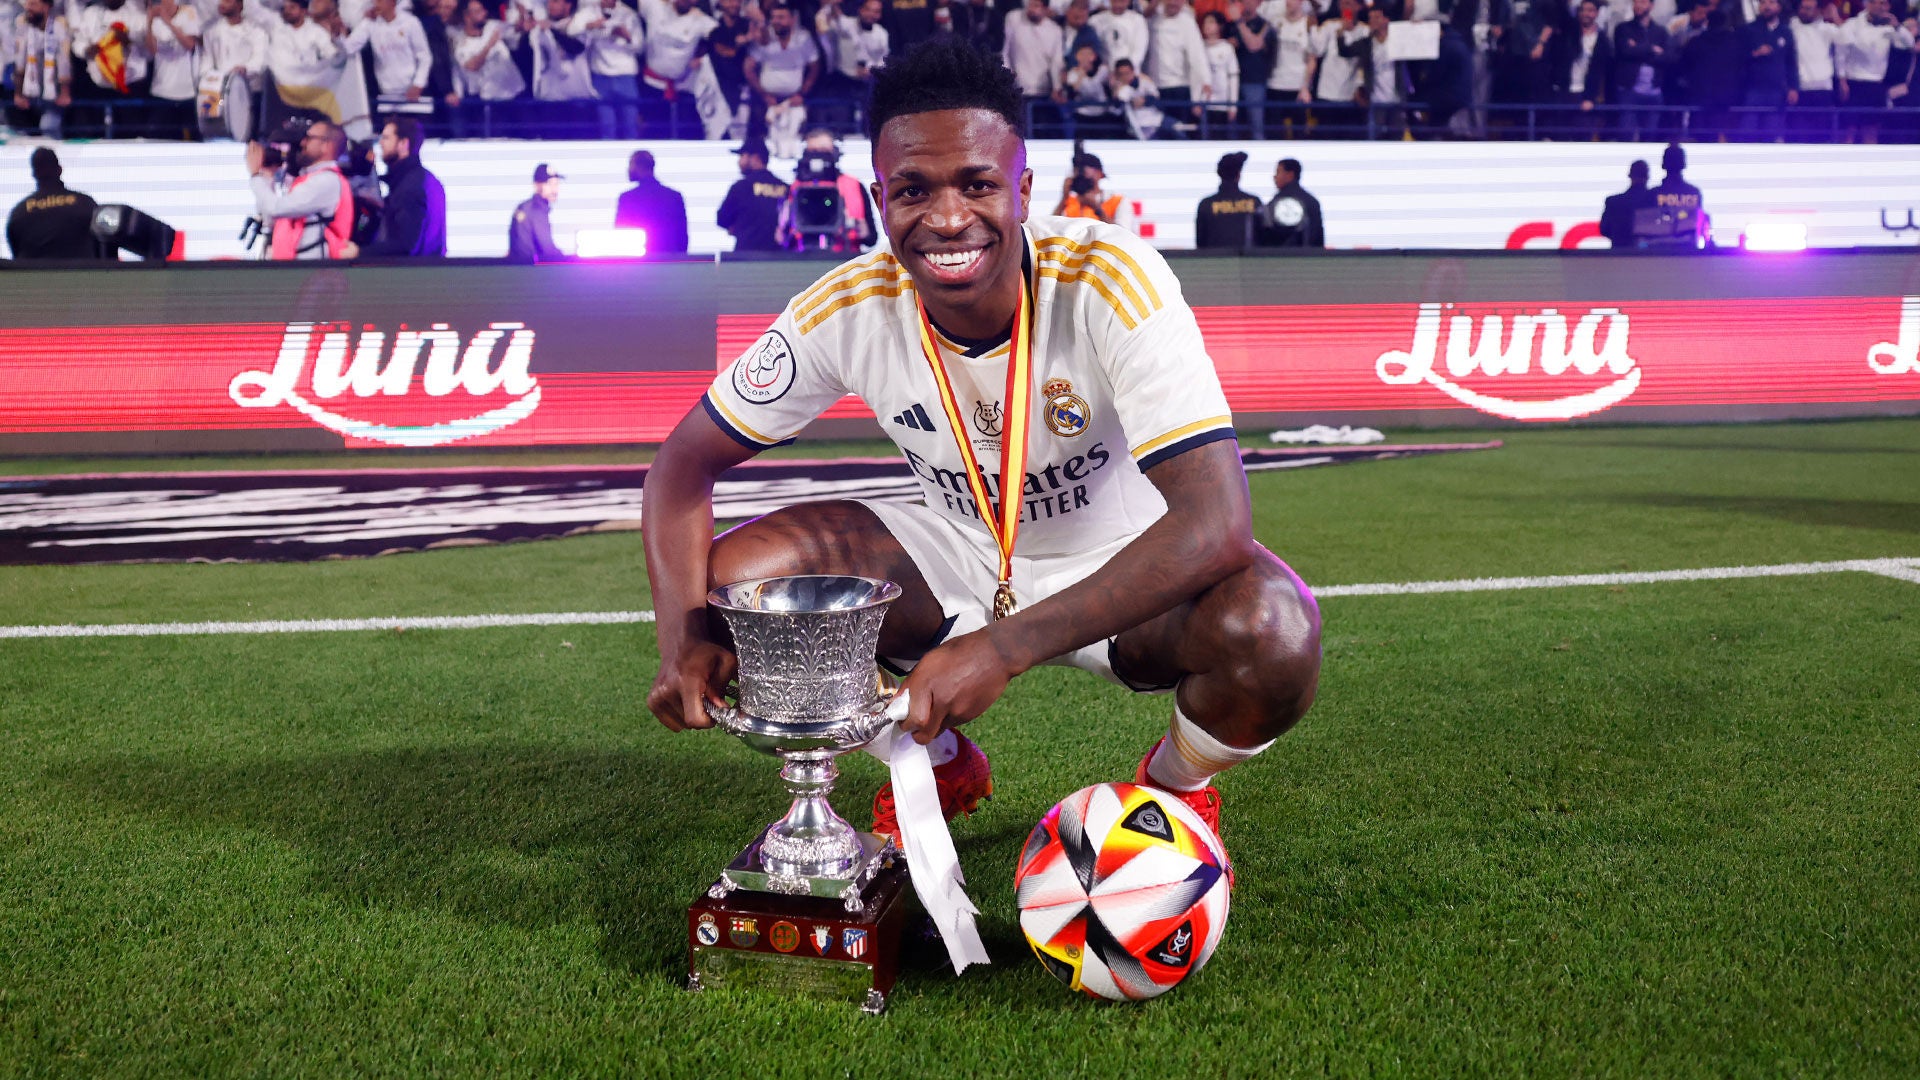 El ‘hat-trick’ de Vini Jr. en 32 minutos para ganar la Supercopa de España